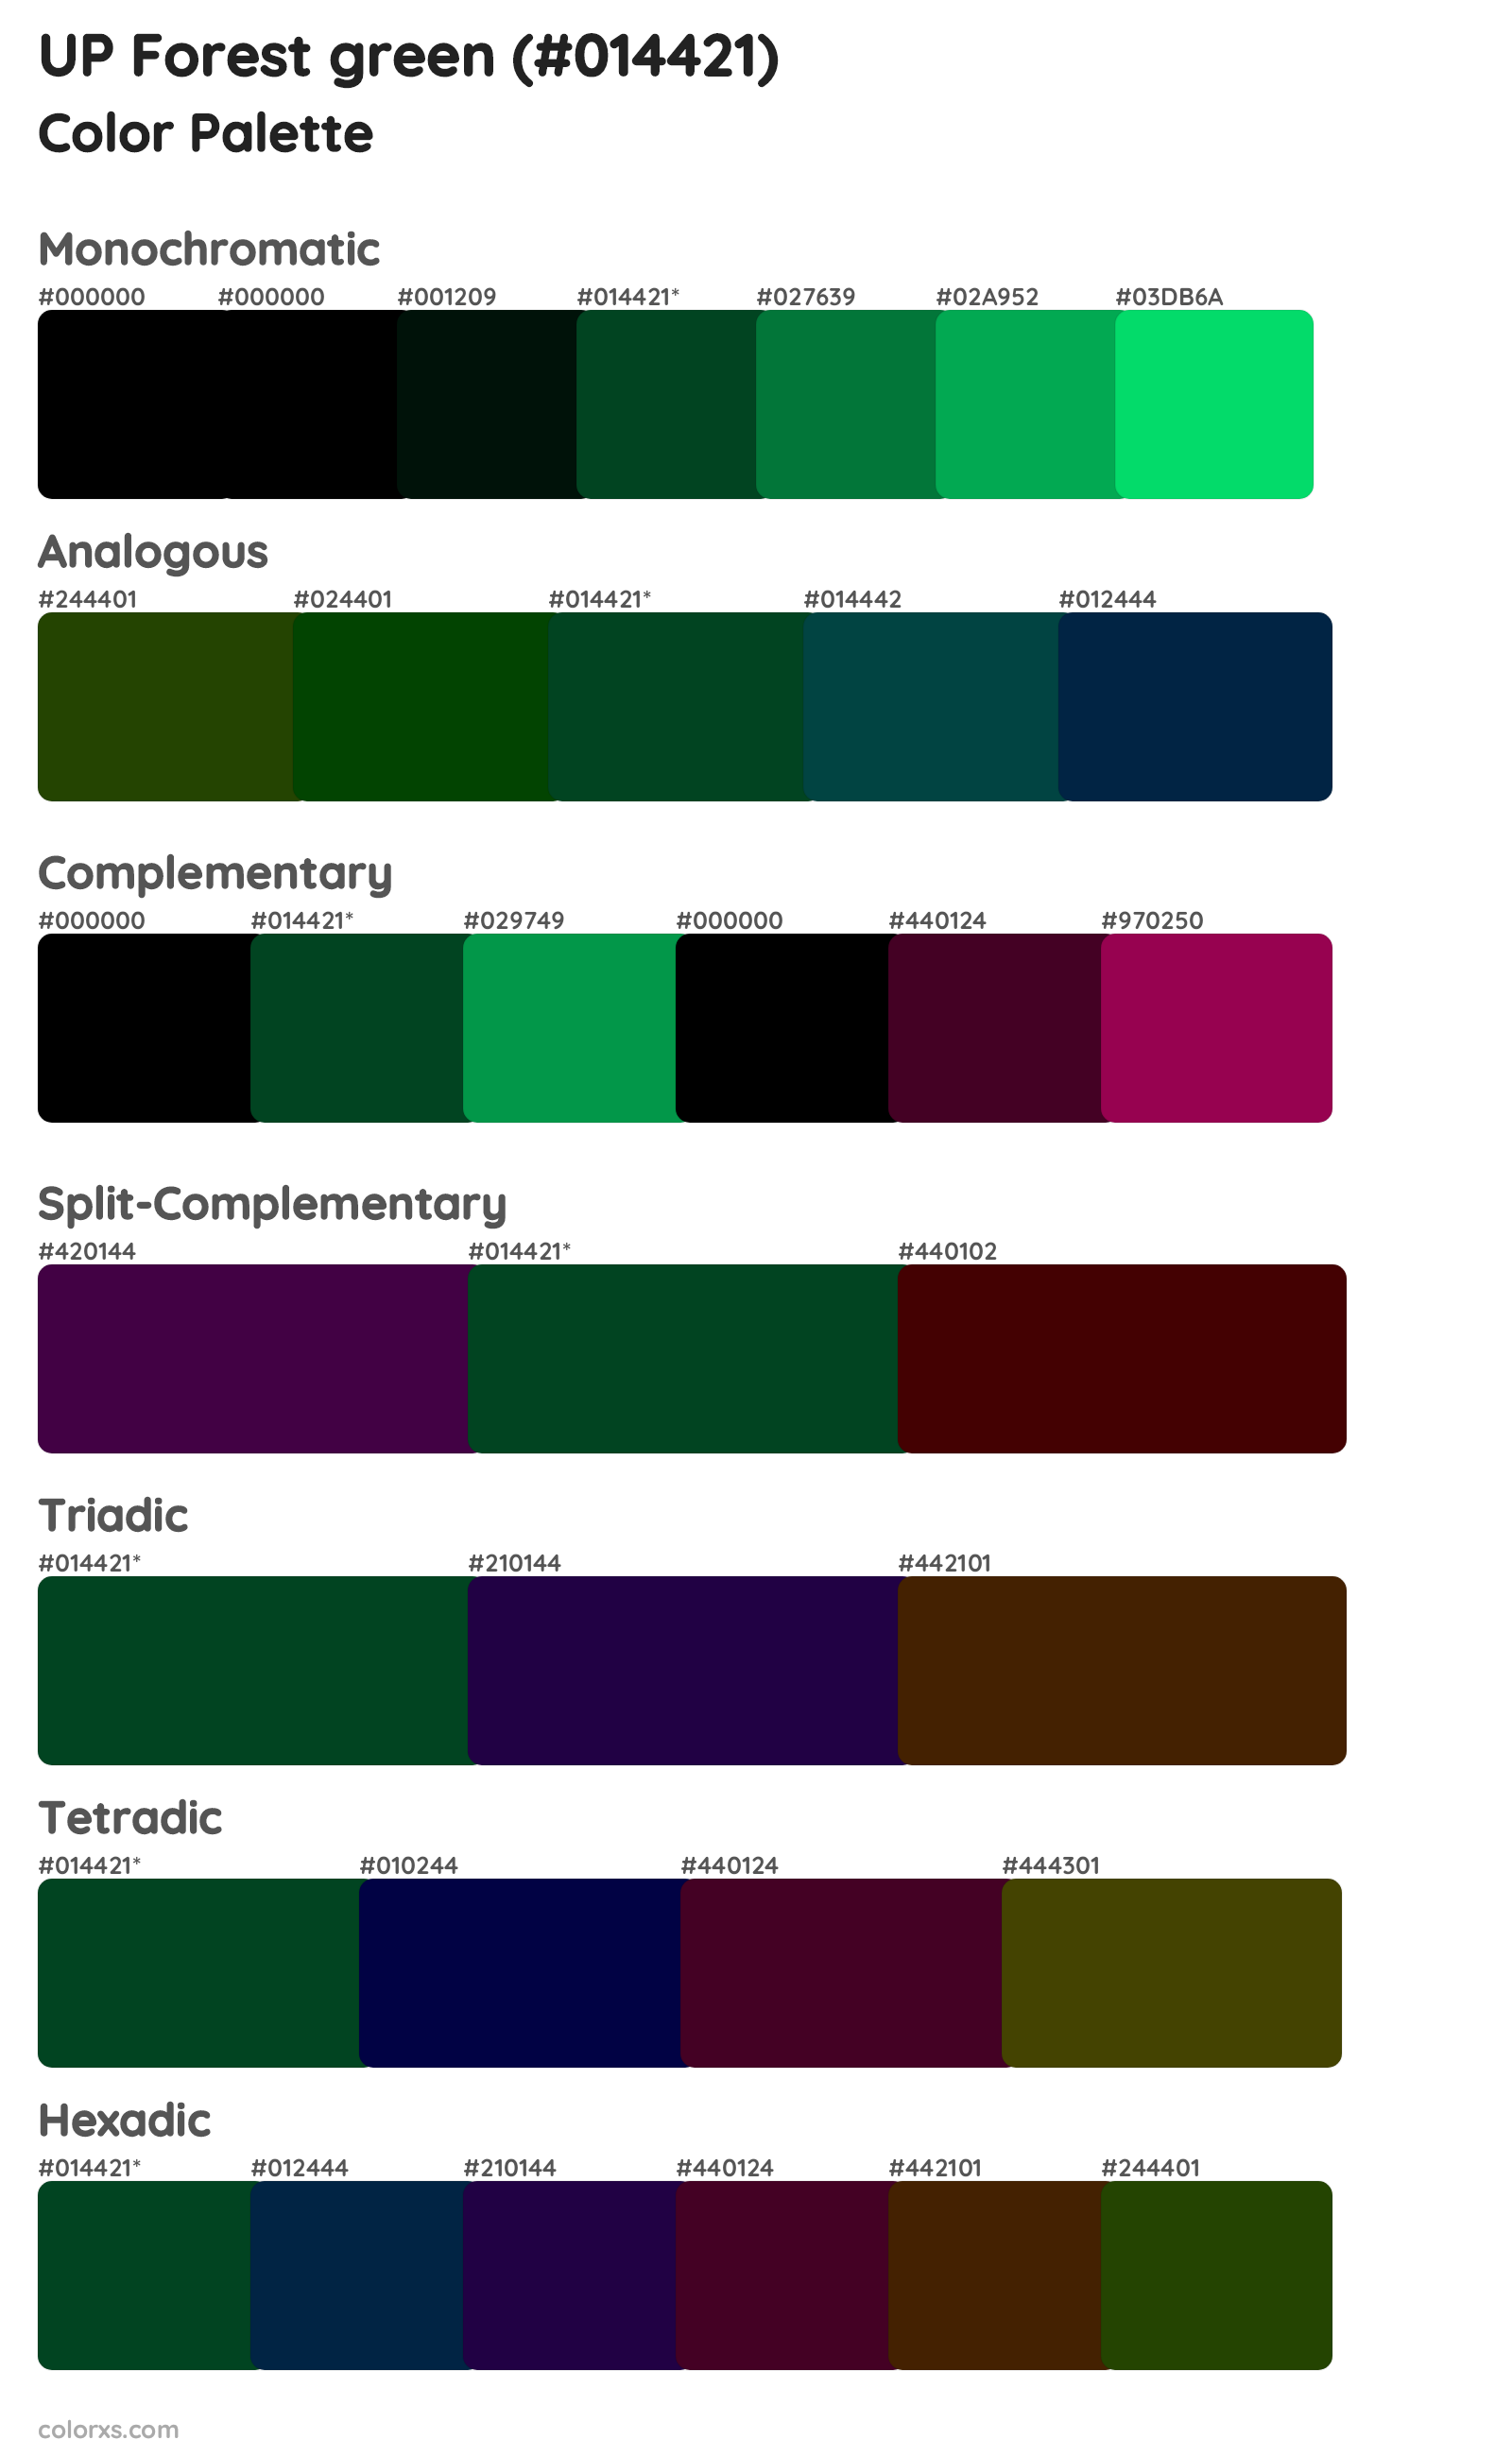 UP Forest green Color Scheme Palettes